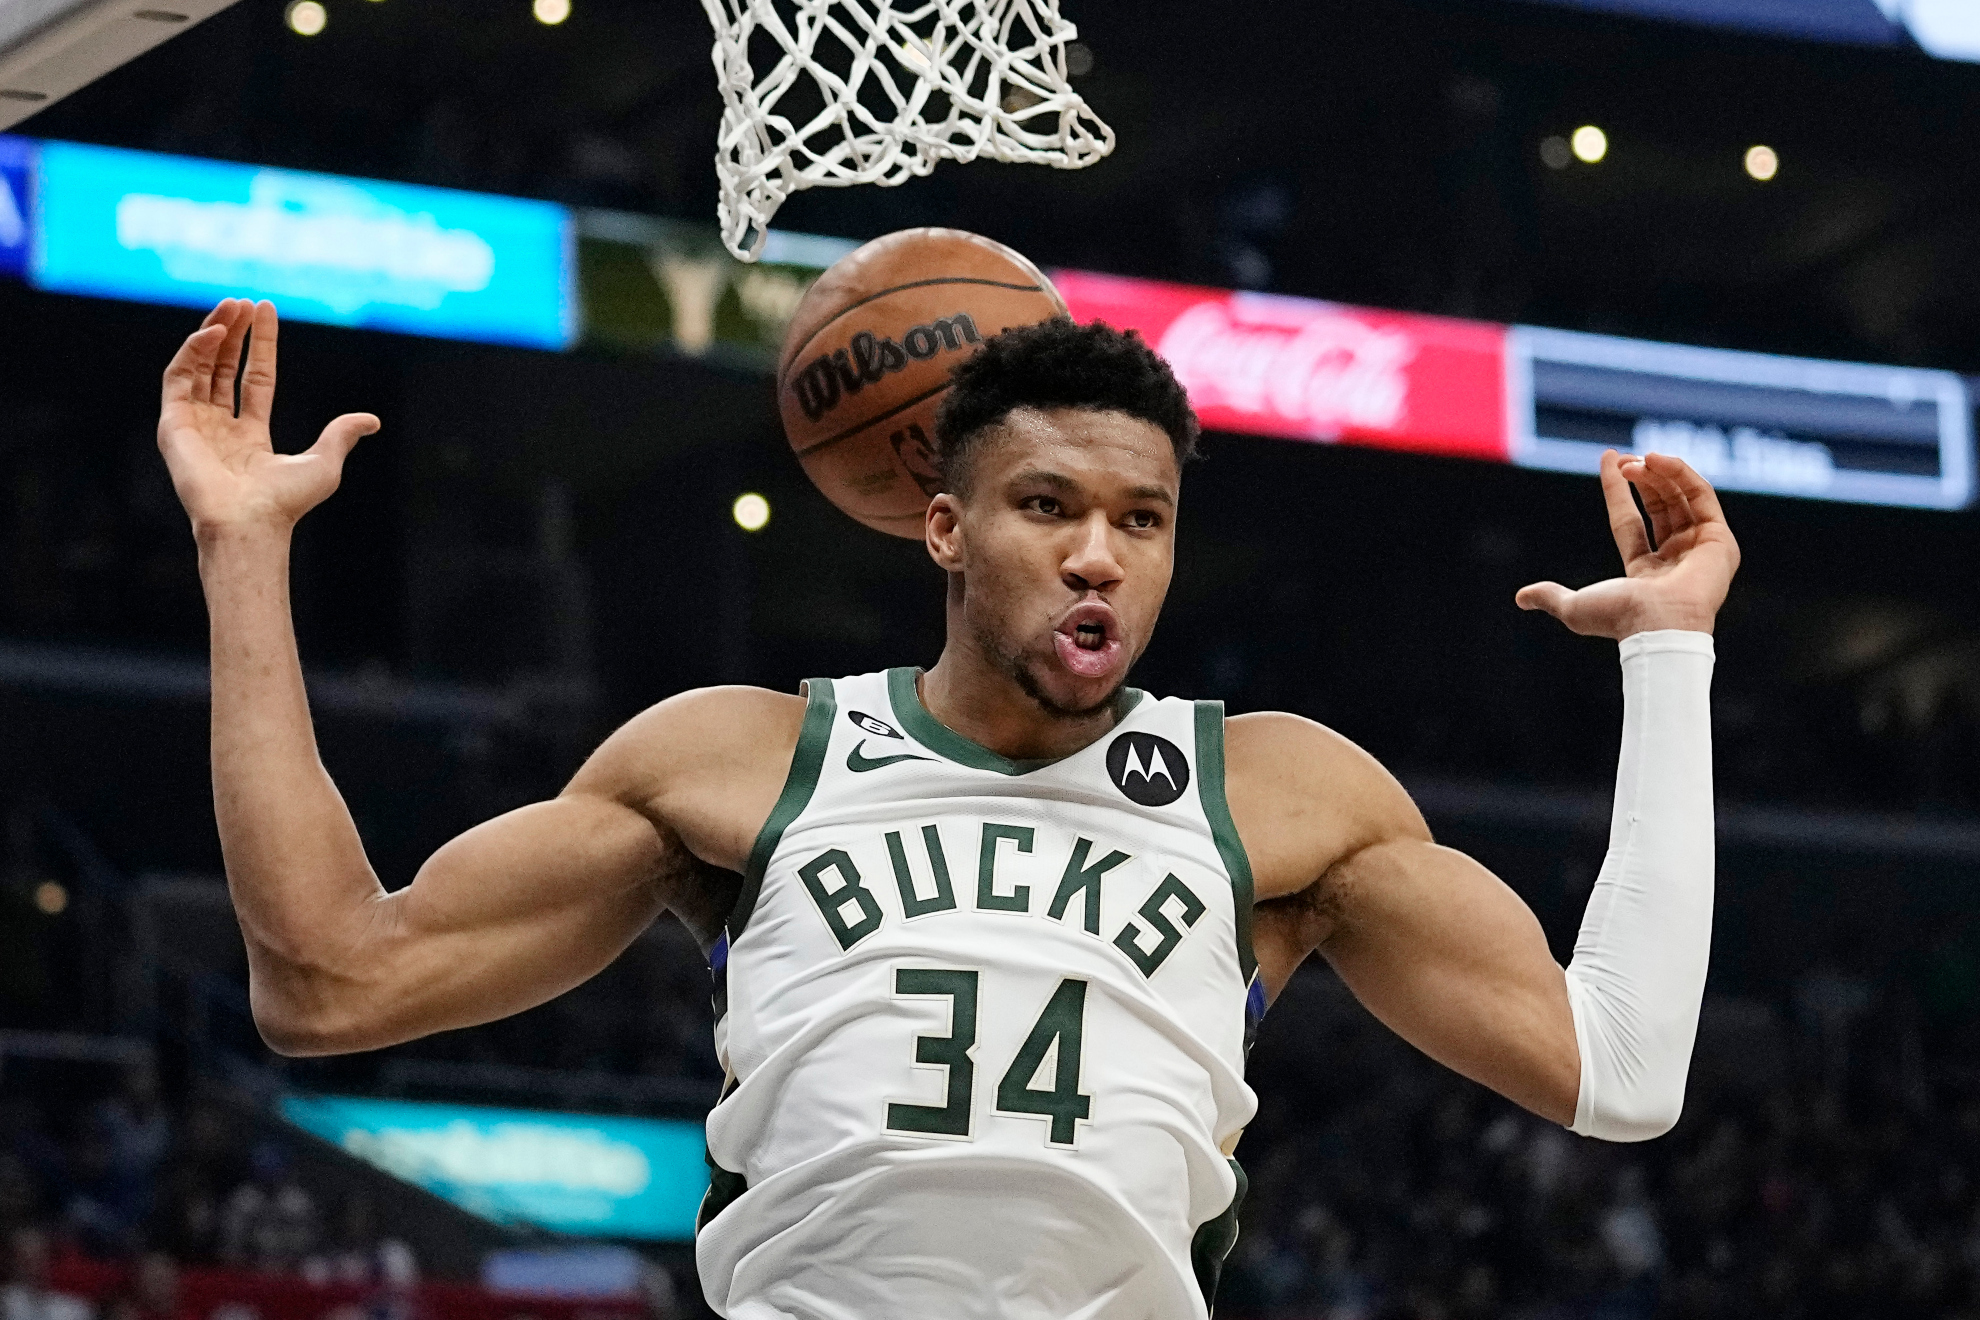 Boston Celtics 125 - 131 Milwaukee Bucks: Stats and highlights